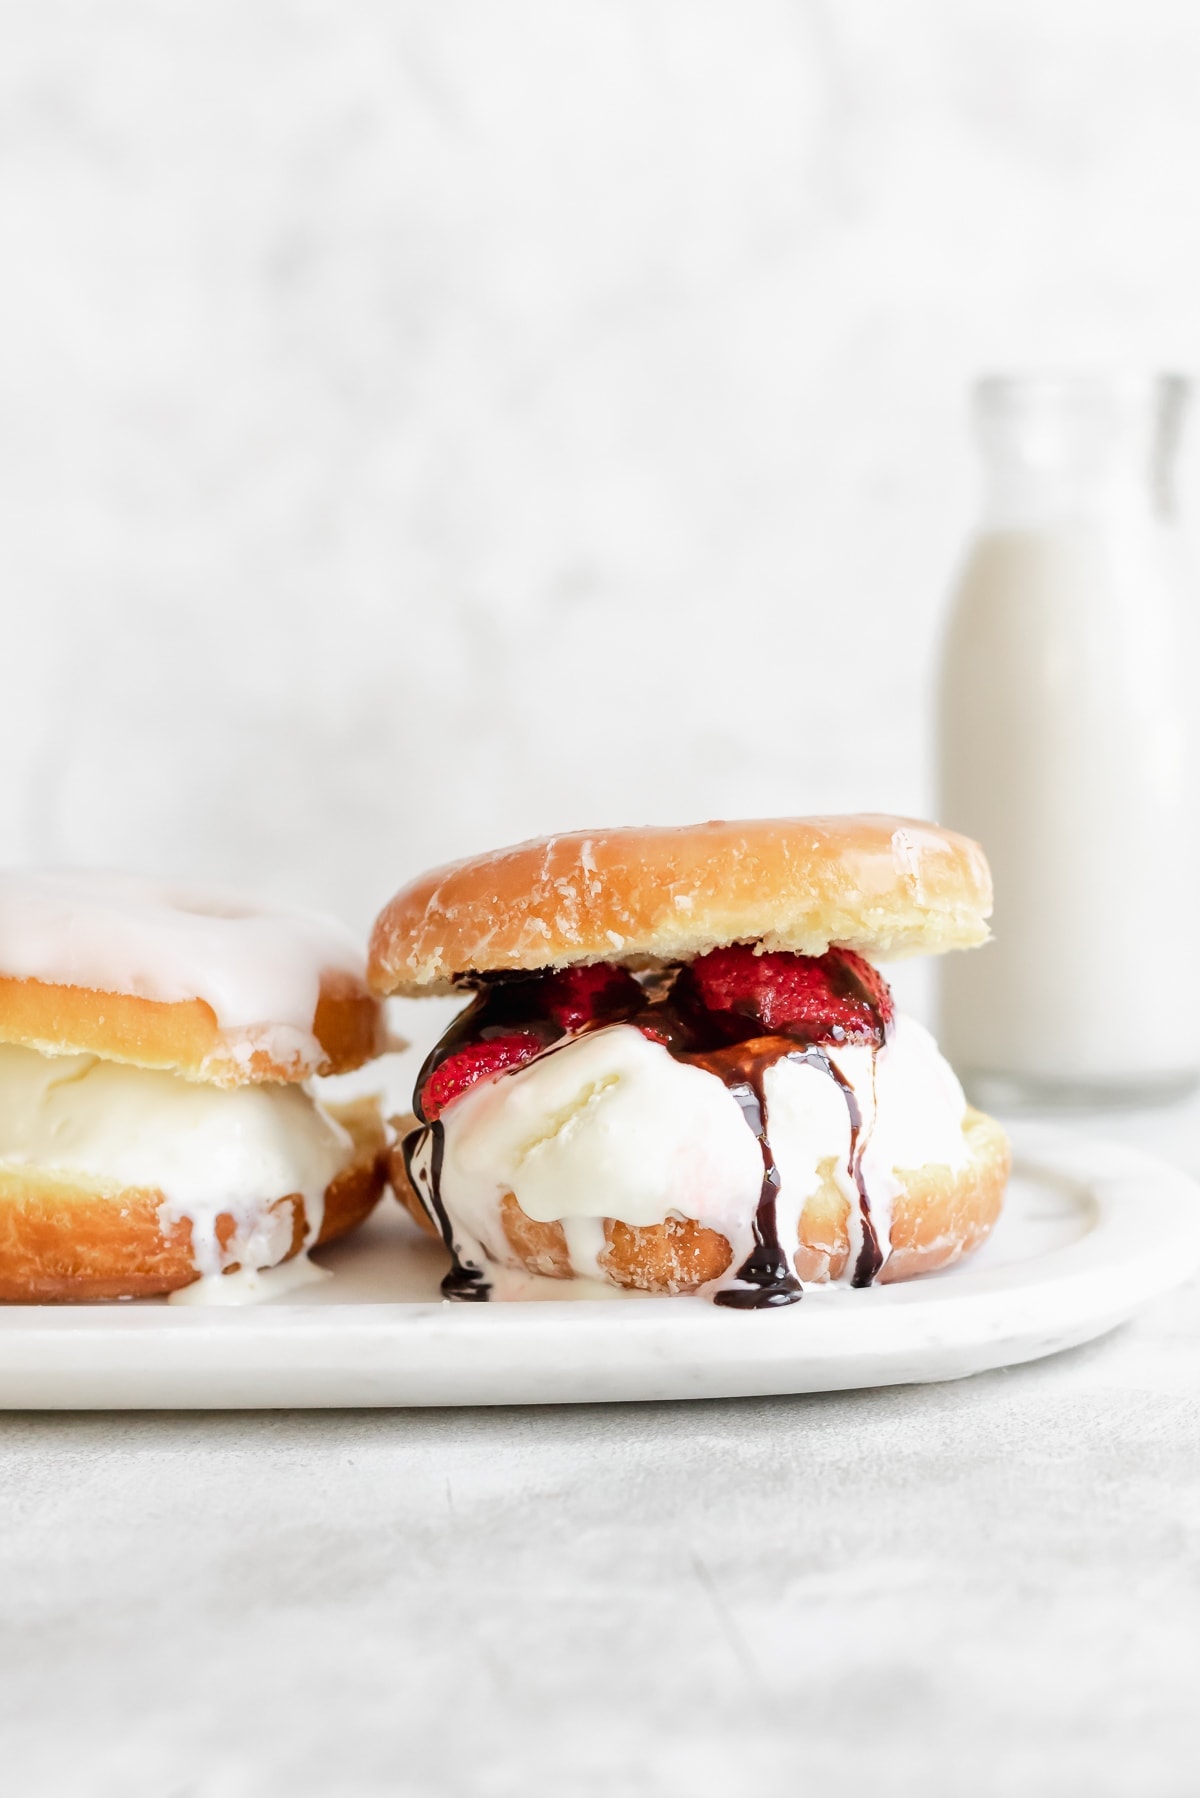 strawberries and chocolate in donut ice cream sandwich